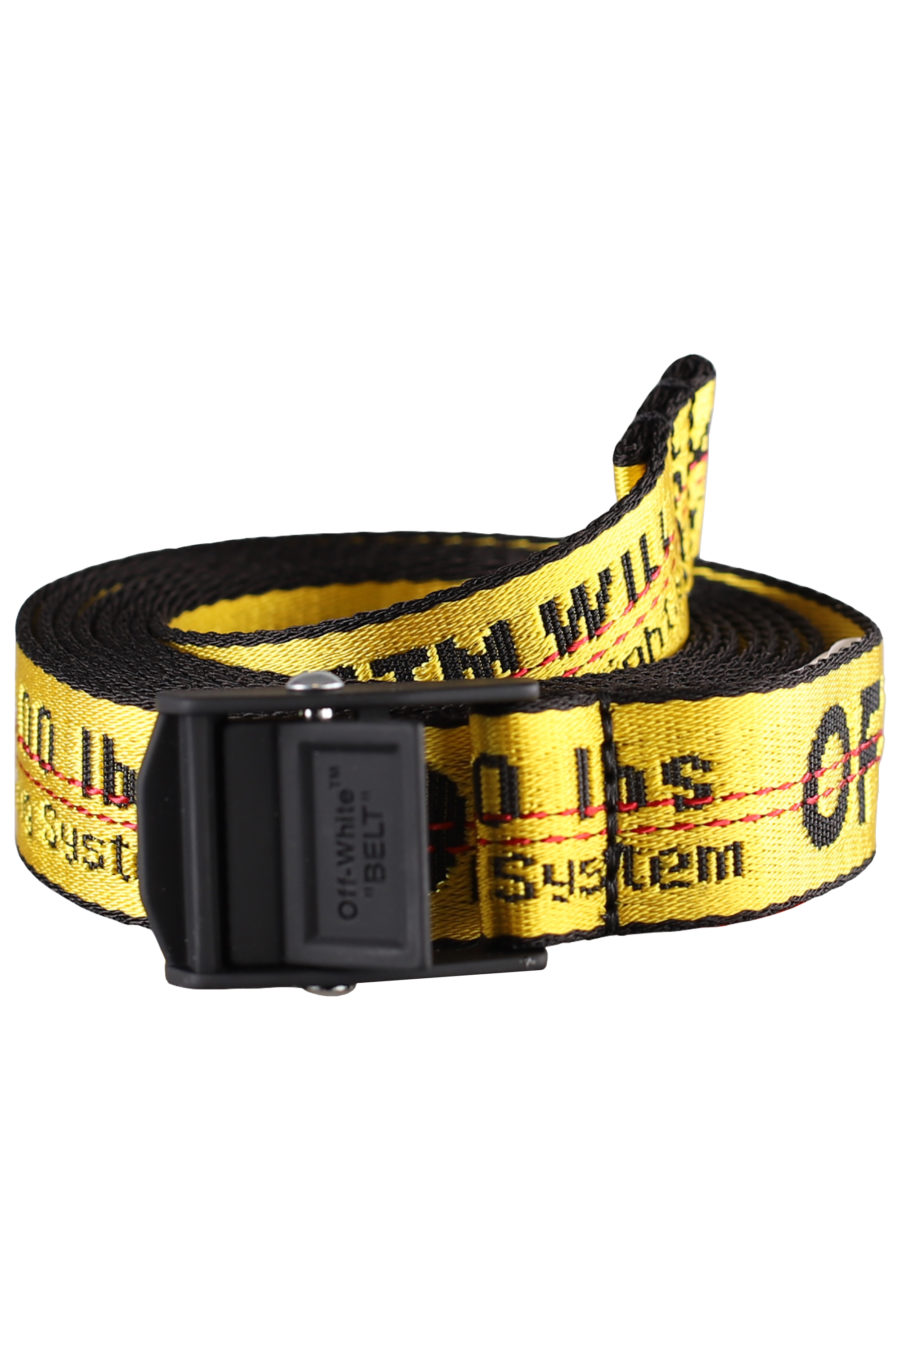 Cinturón industrial amarillo mini - IMG 7302